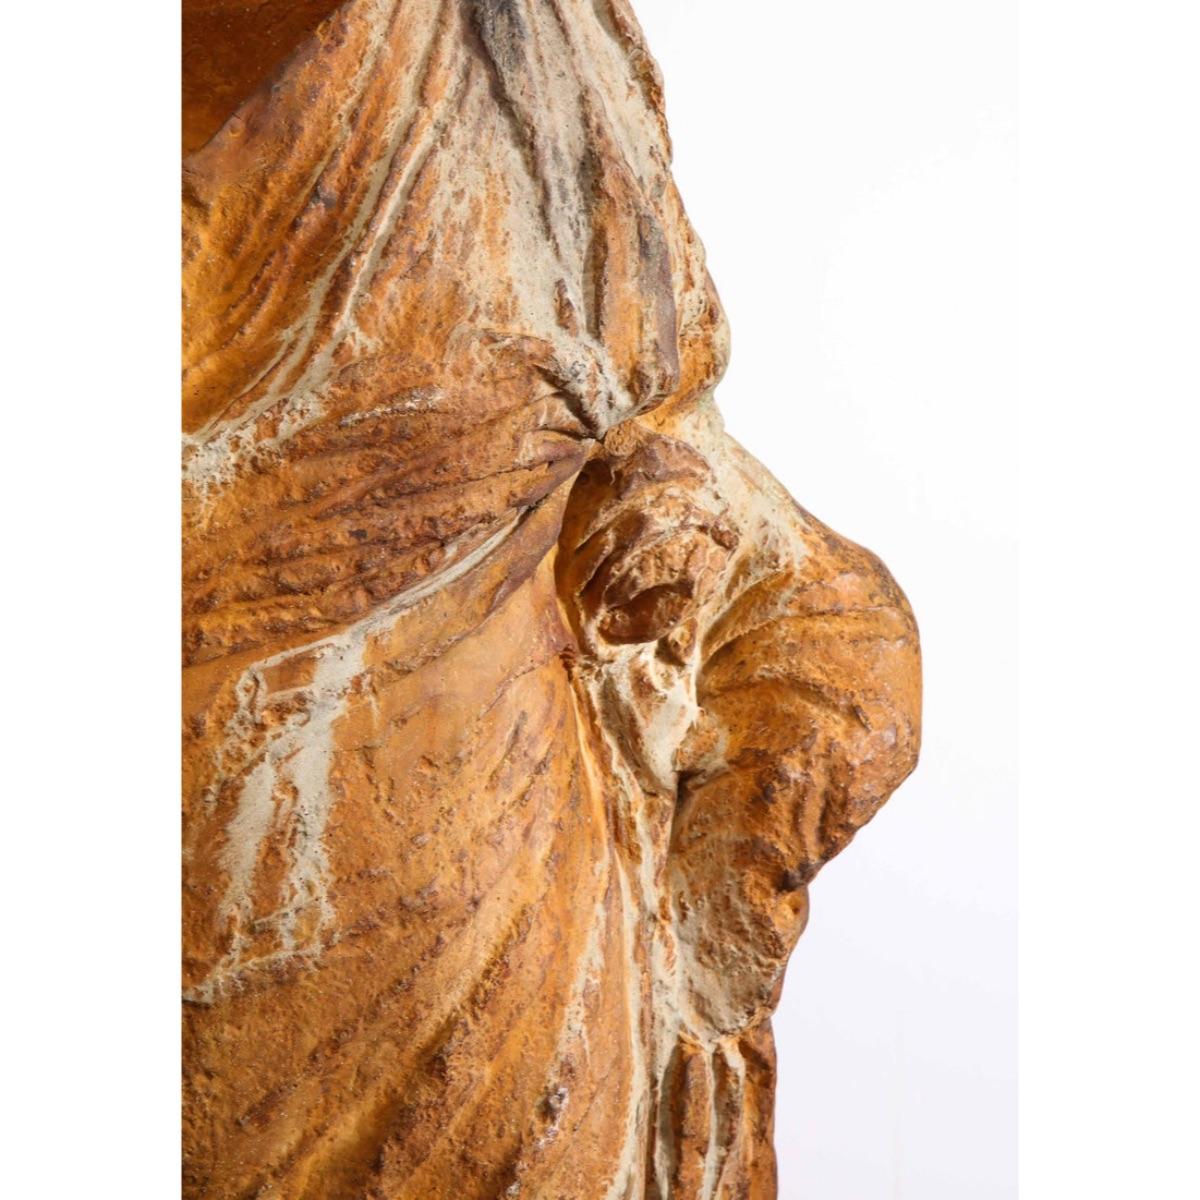 Life-Size Roman Style Patinated Fiberglass Torso, after the Antique 2